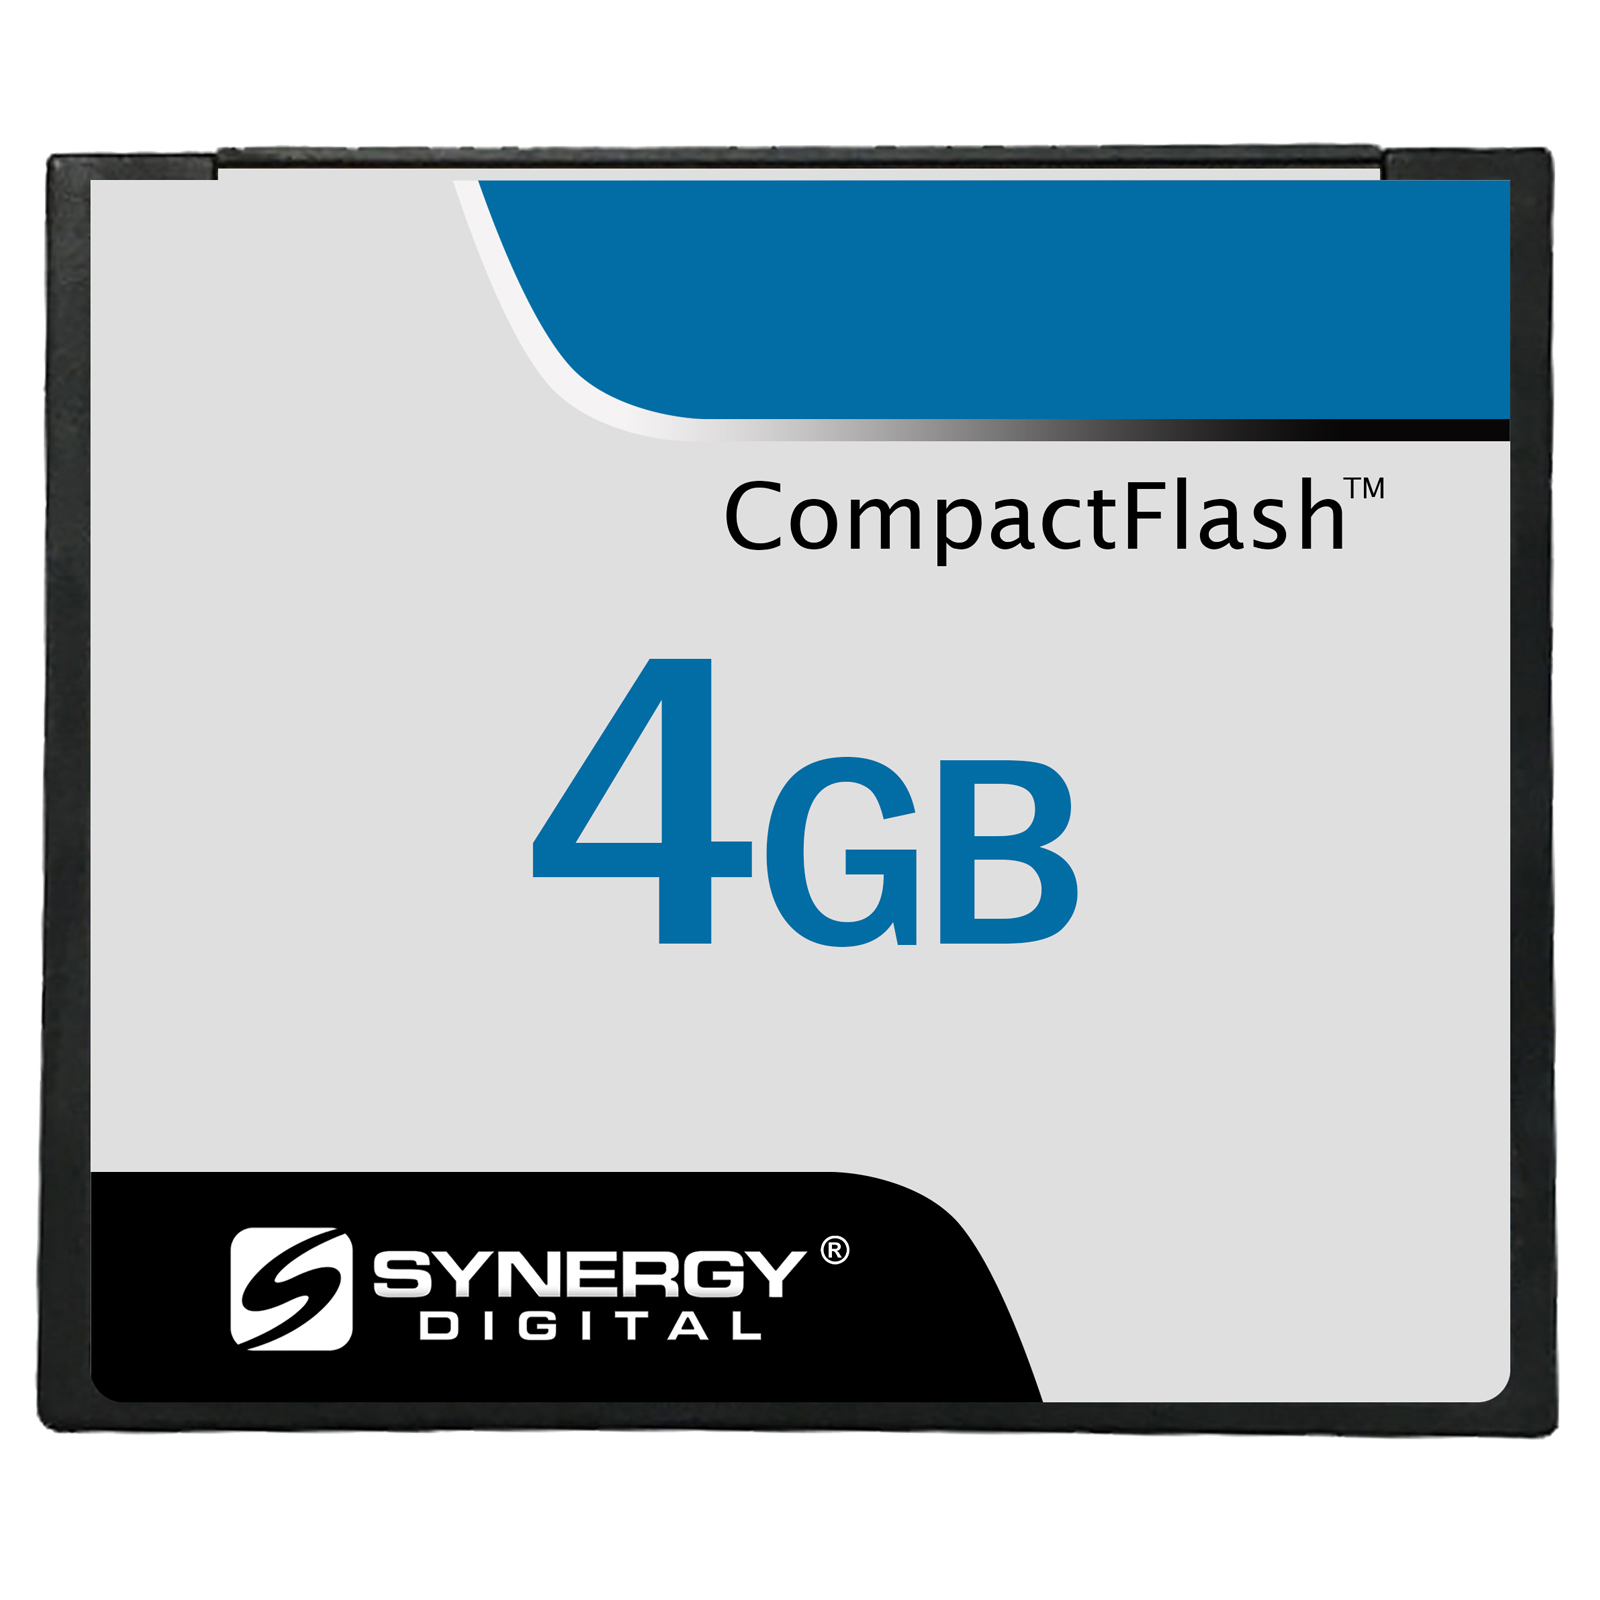 4GB CompactFlash Memory Card